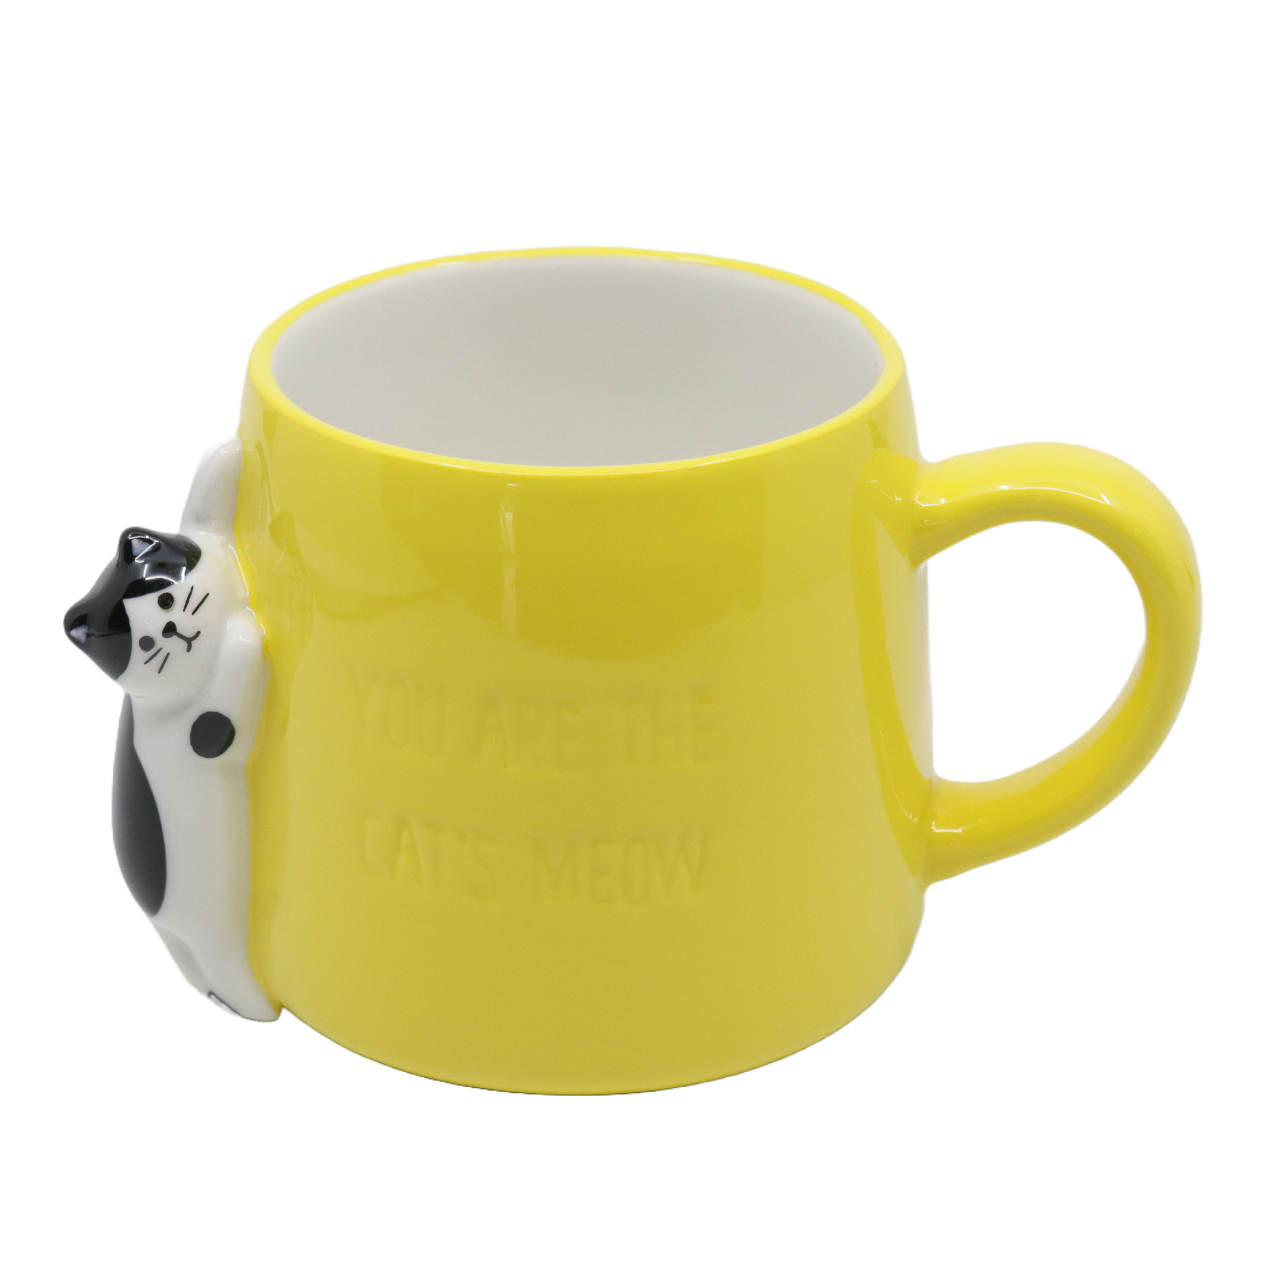 Decole Pastel Yellow Color Cat Mug